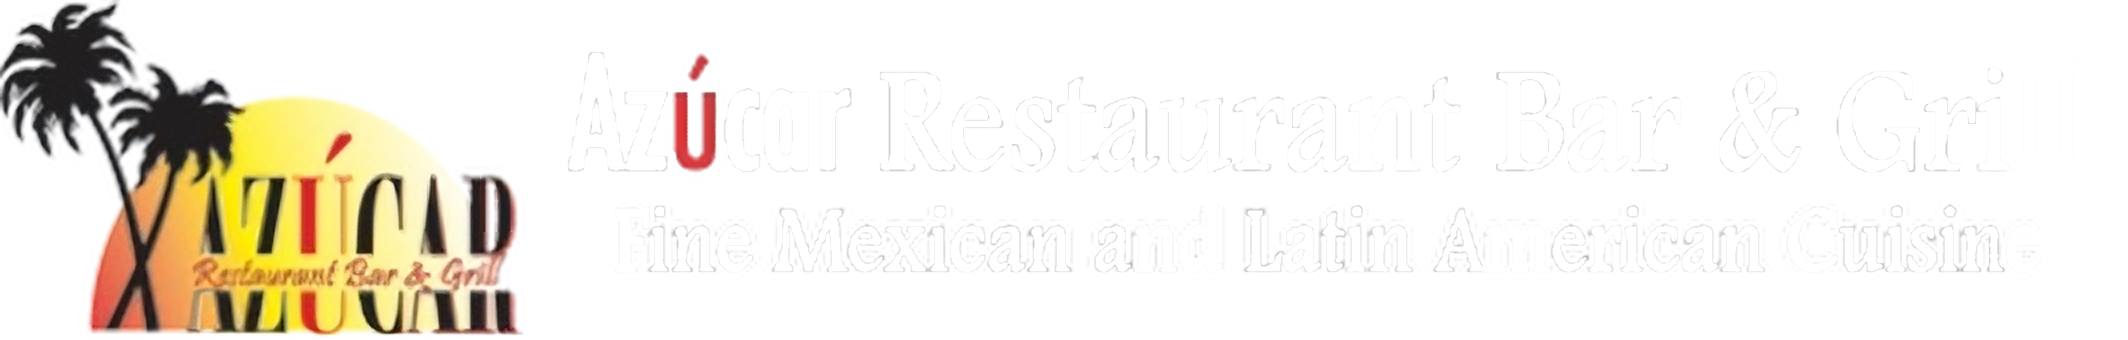 Azucar Restaurant